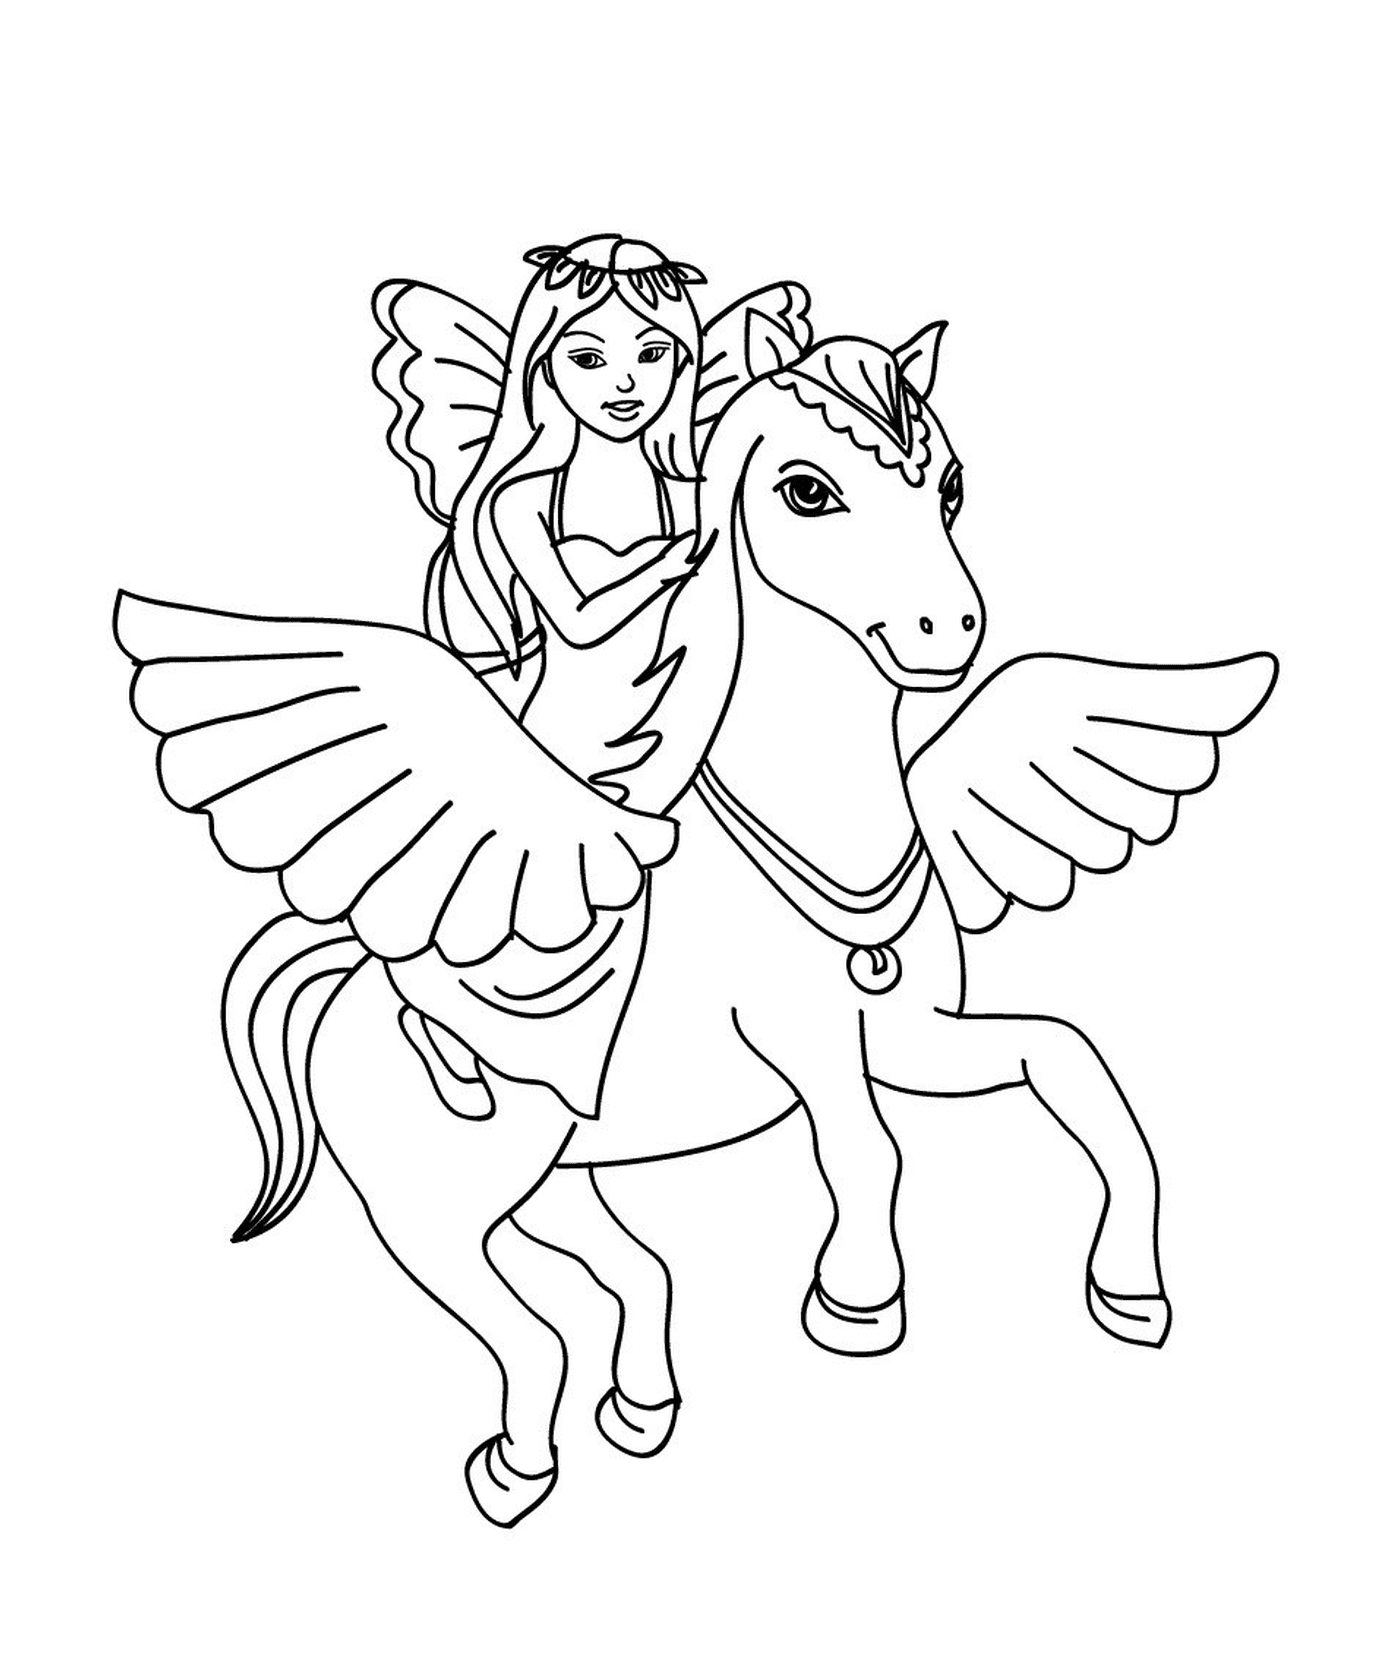  A fairy riding a horse 